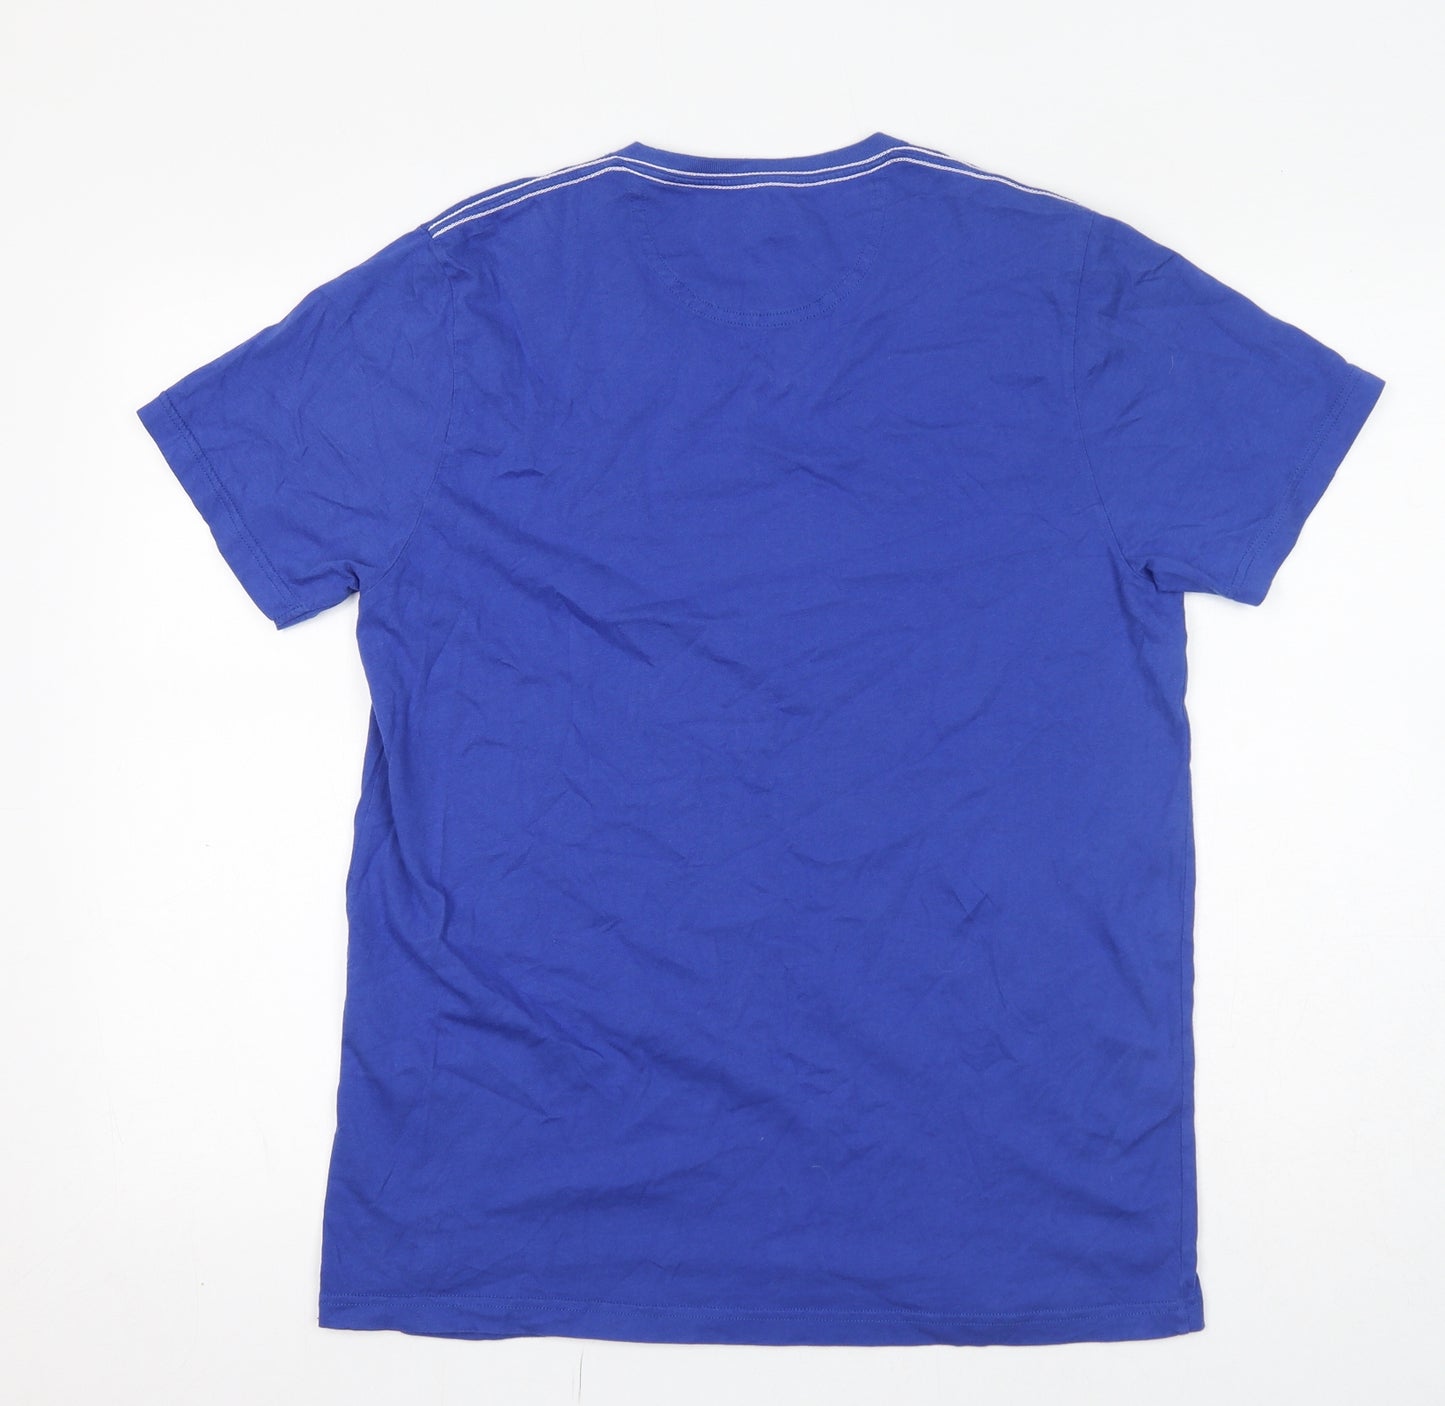 Henri Lloyd Mens Blue Polyester T-Shirt Size M Crew Neck